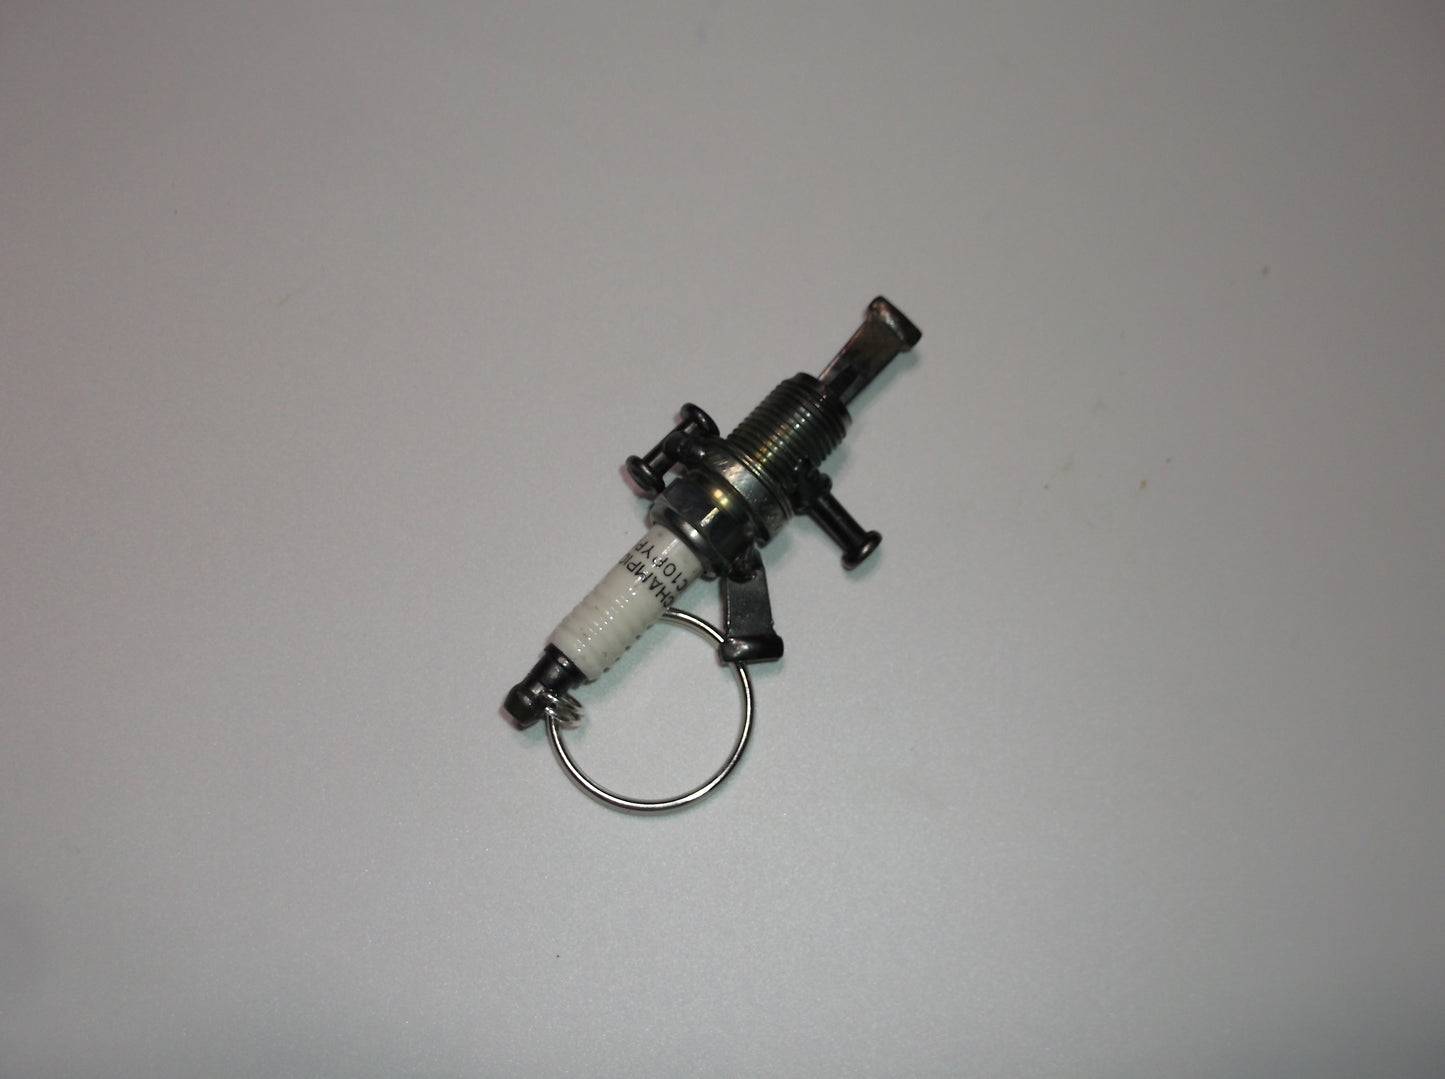 Miniature Machine Gun Key Chain, Up cycled Spark plug